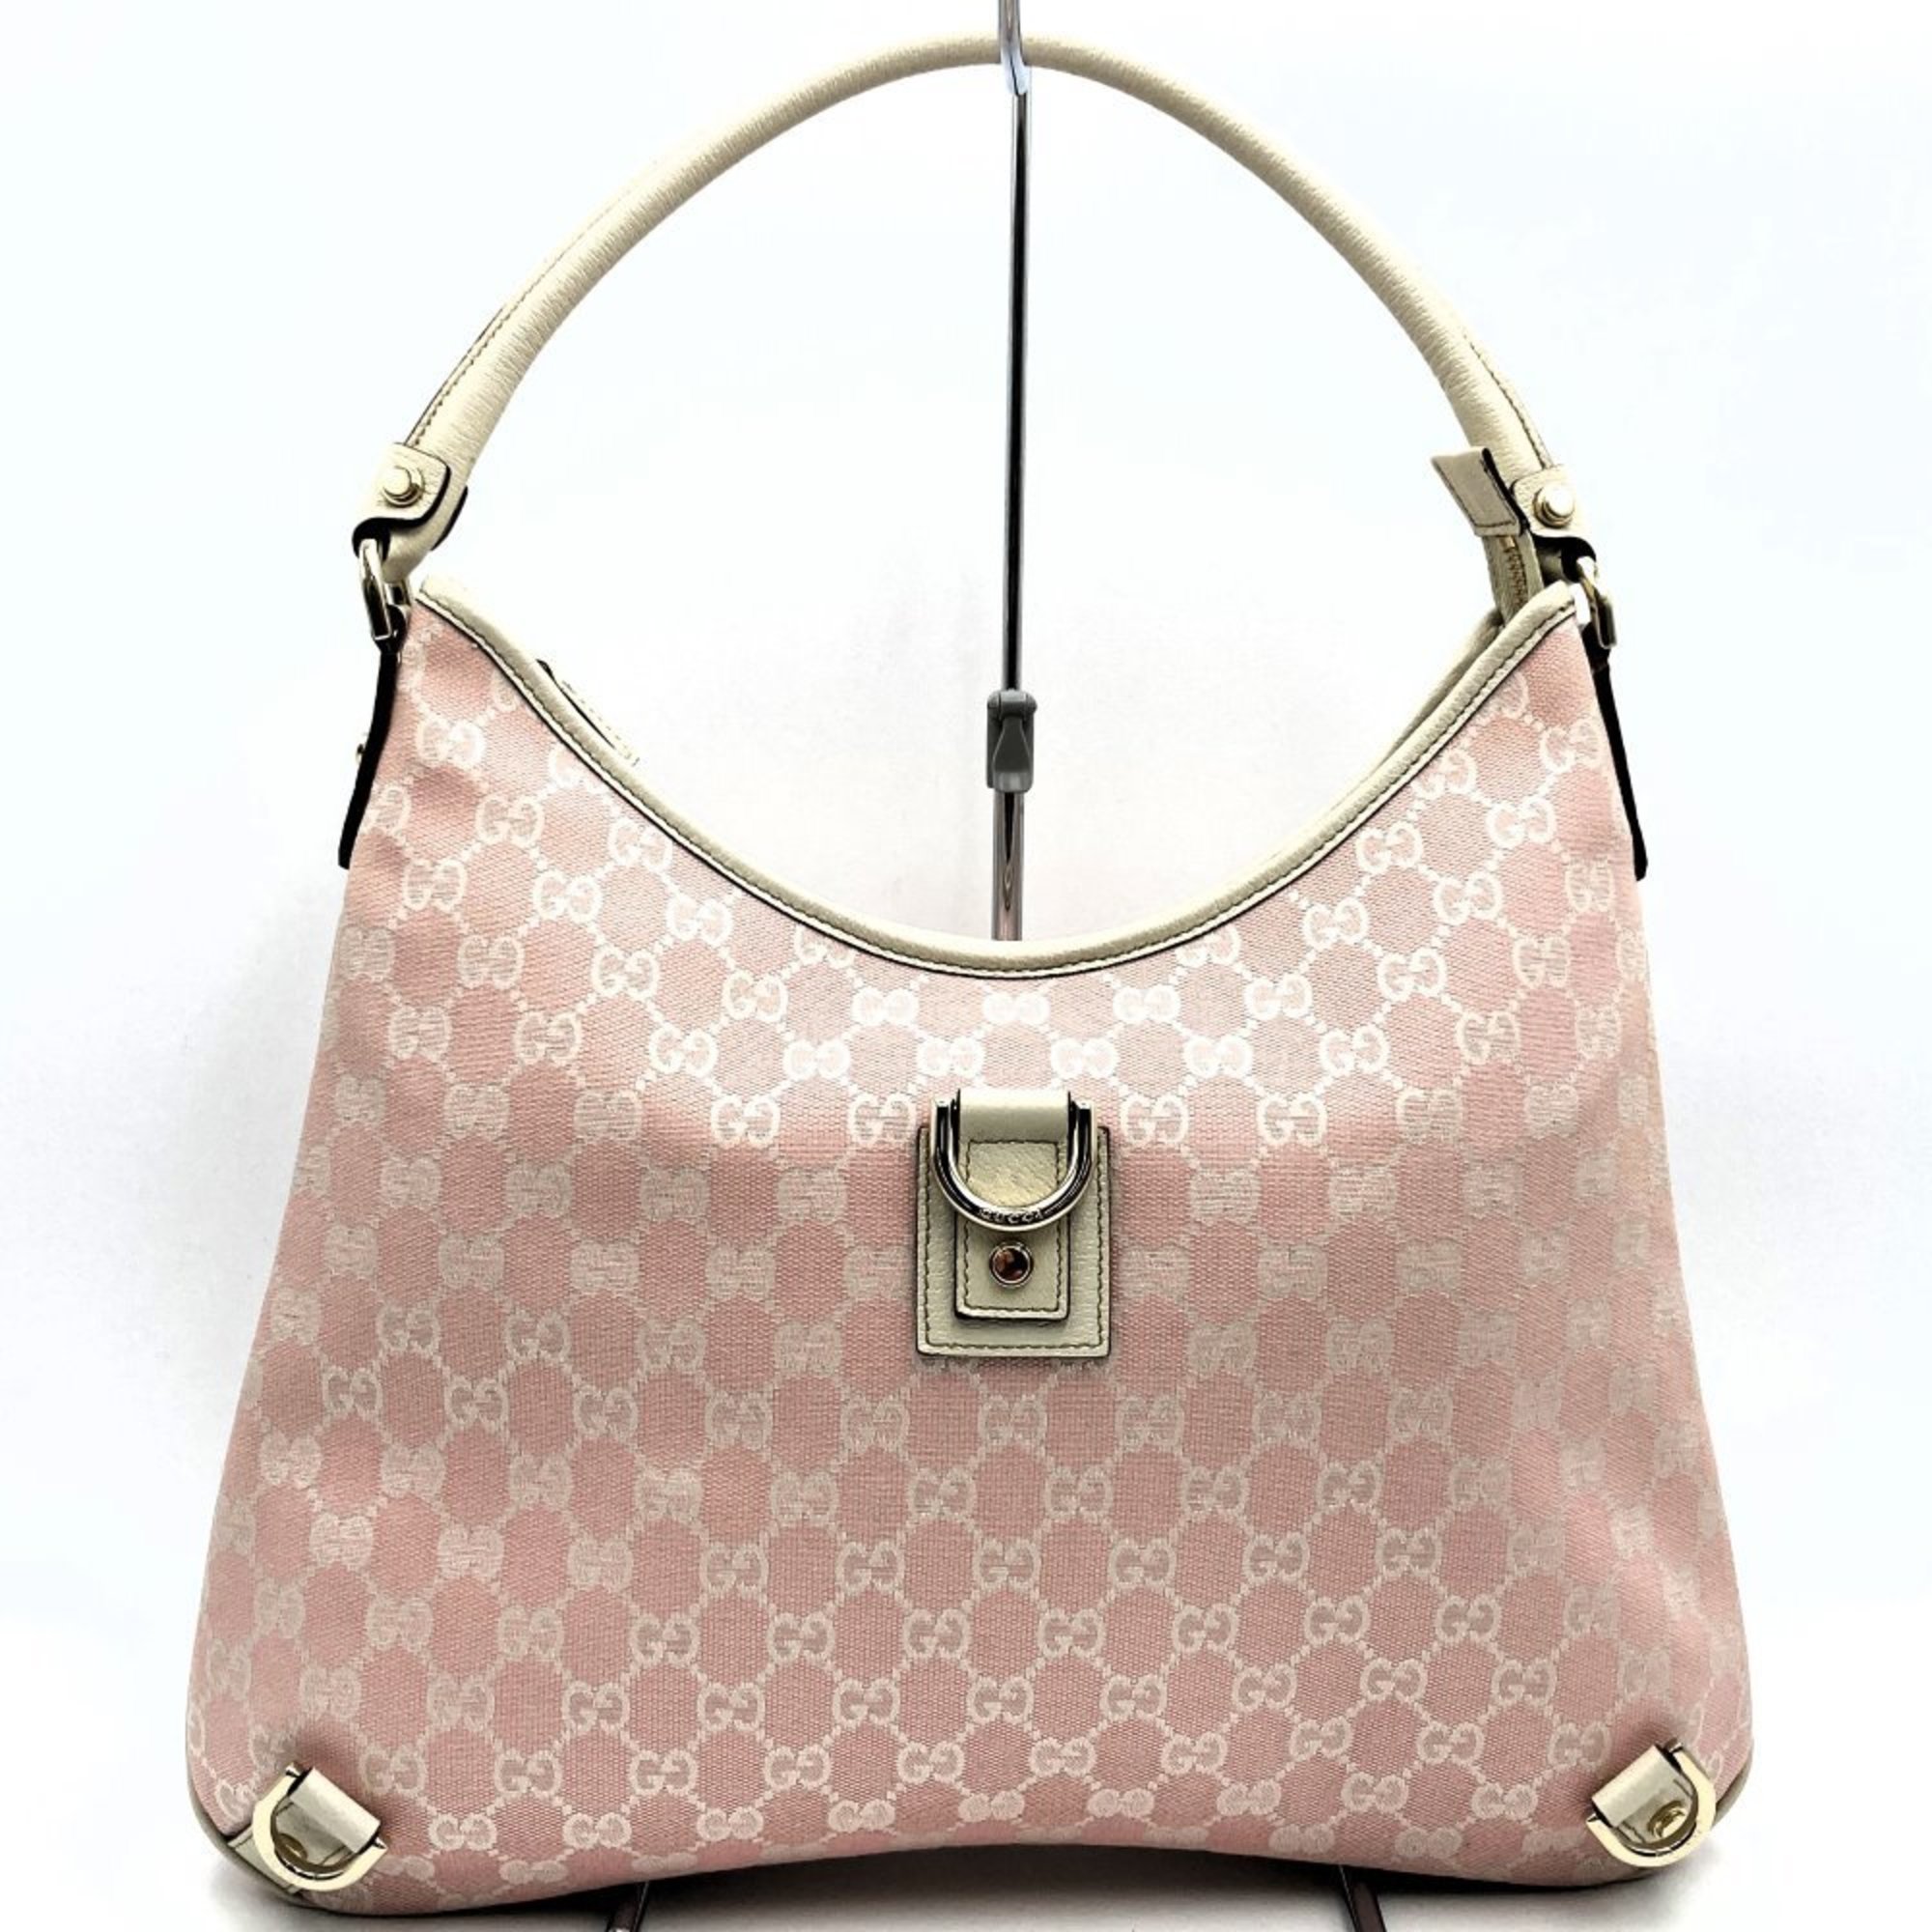 GUCCI 130737 Shoulder Bag Pink/White Abby GG Canvas Women's Fashion